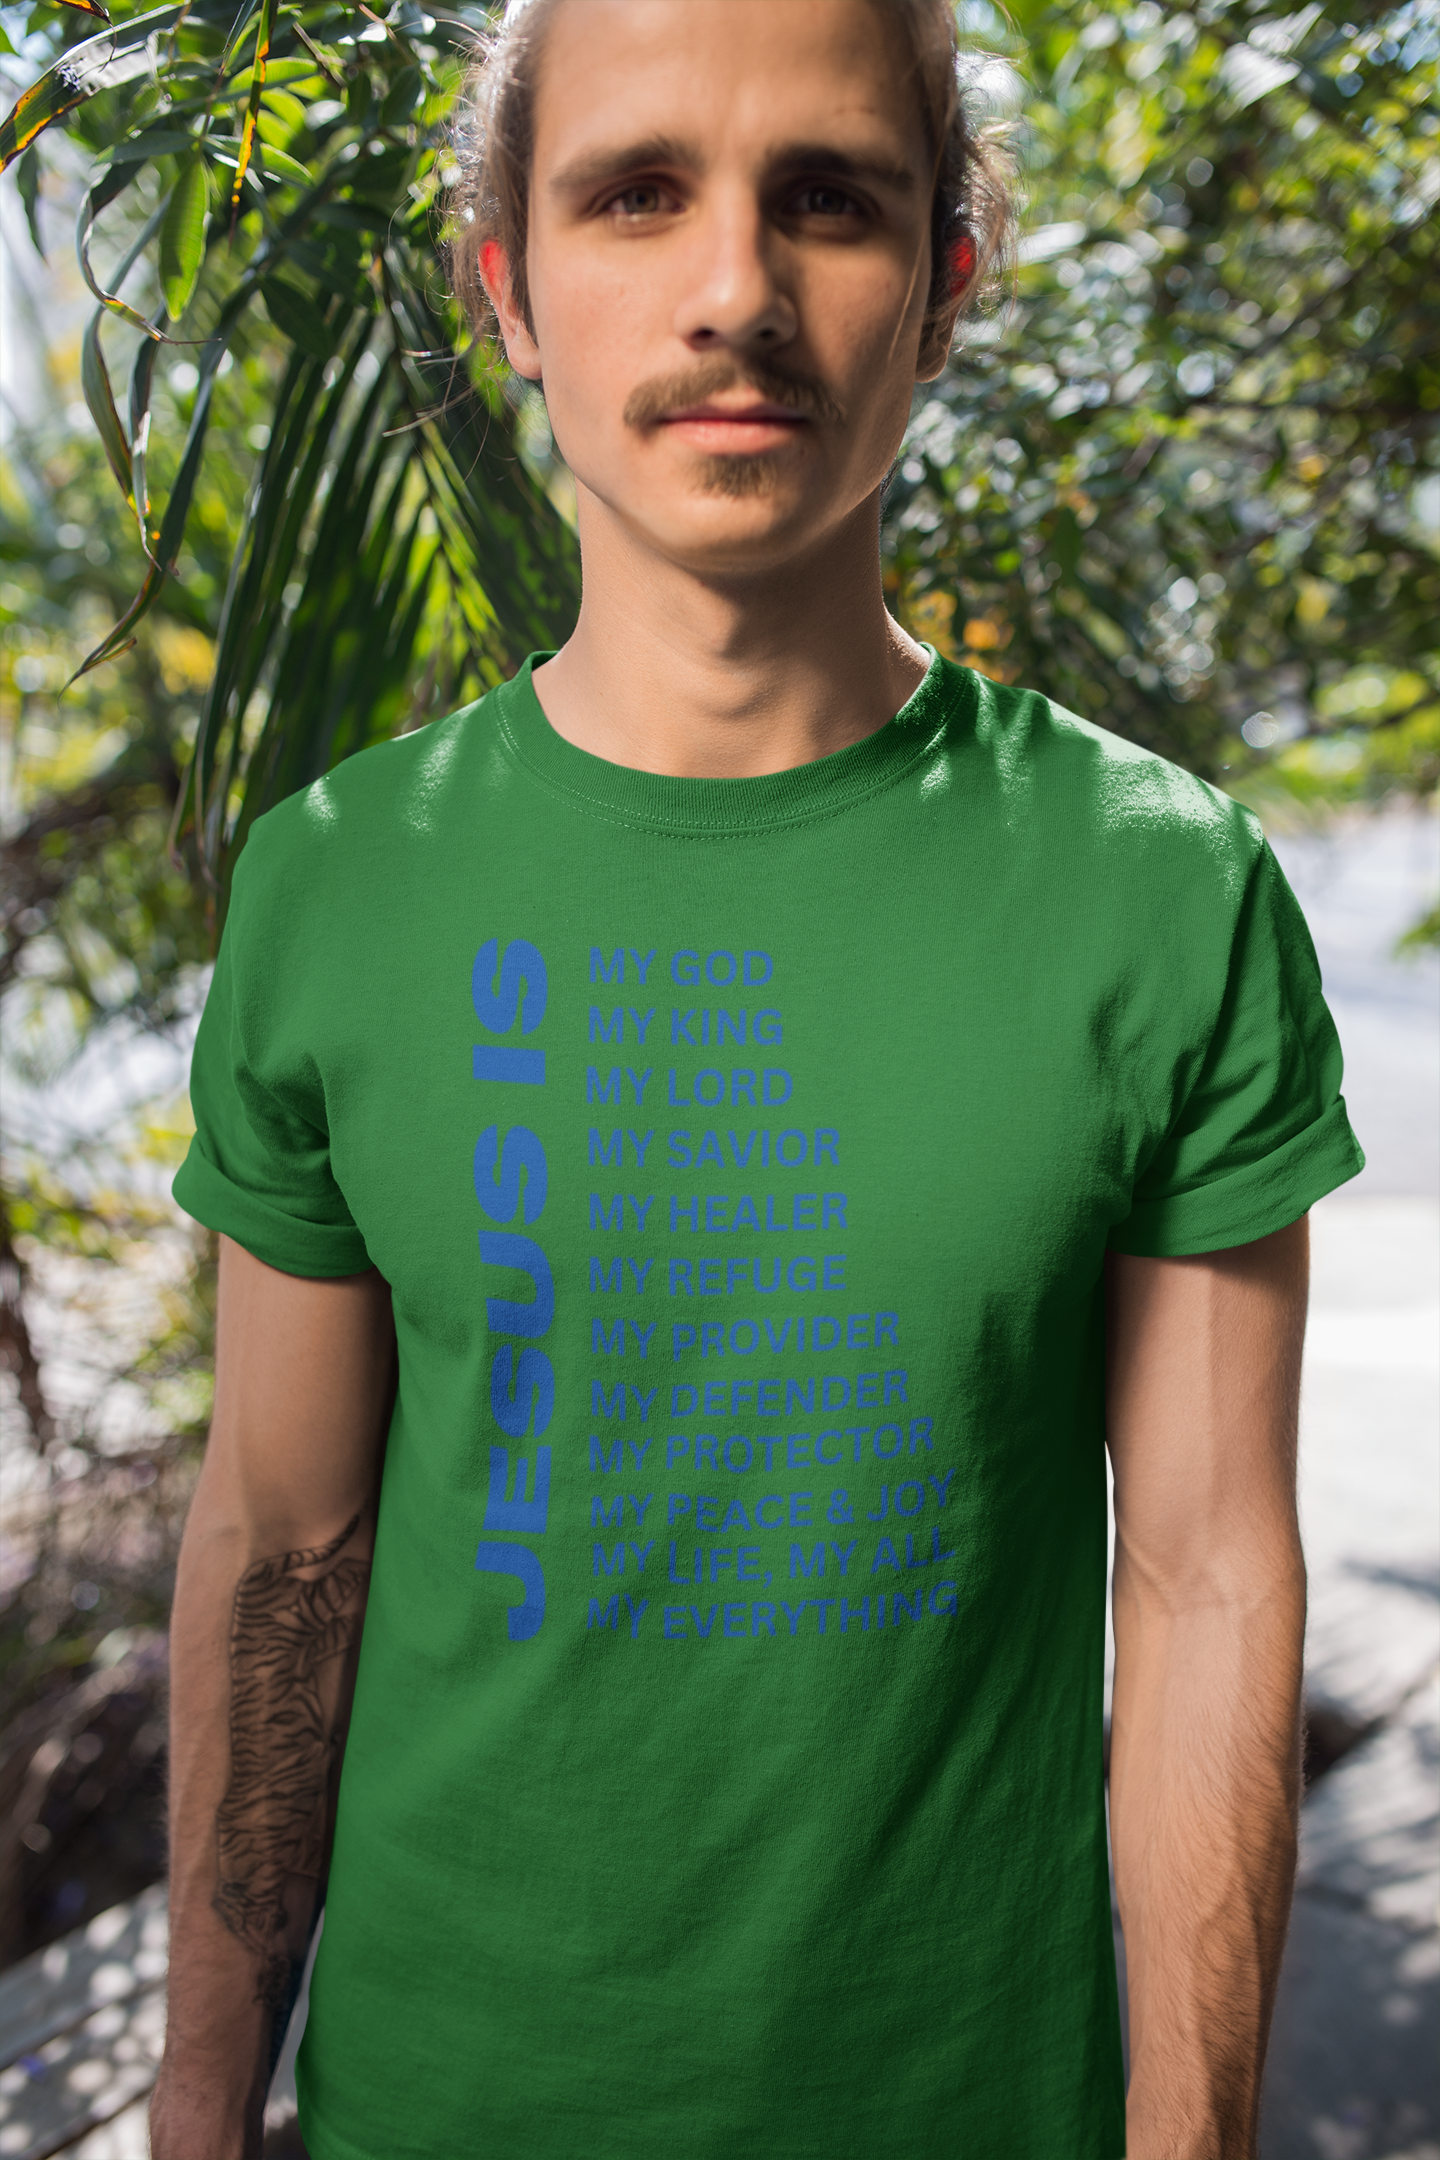 Jesus Is Christian T-Shirt - Short Sleeve Blue